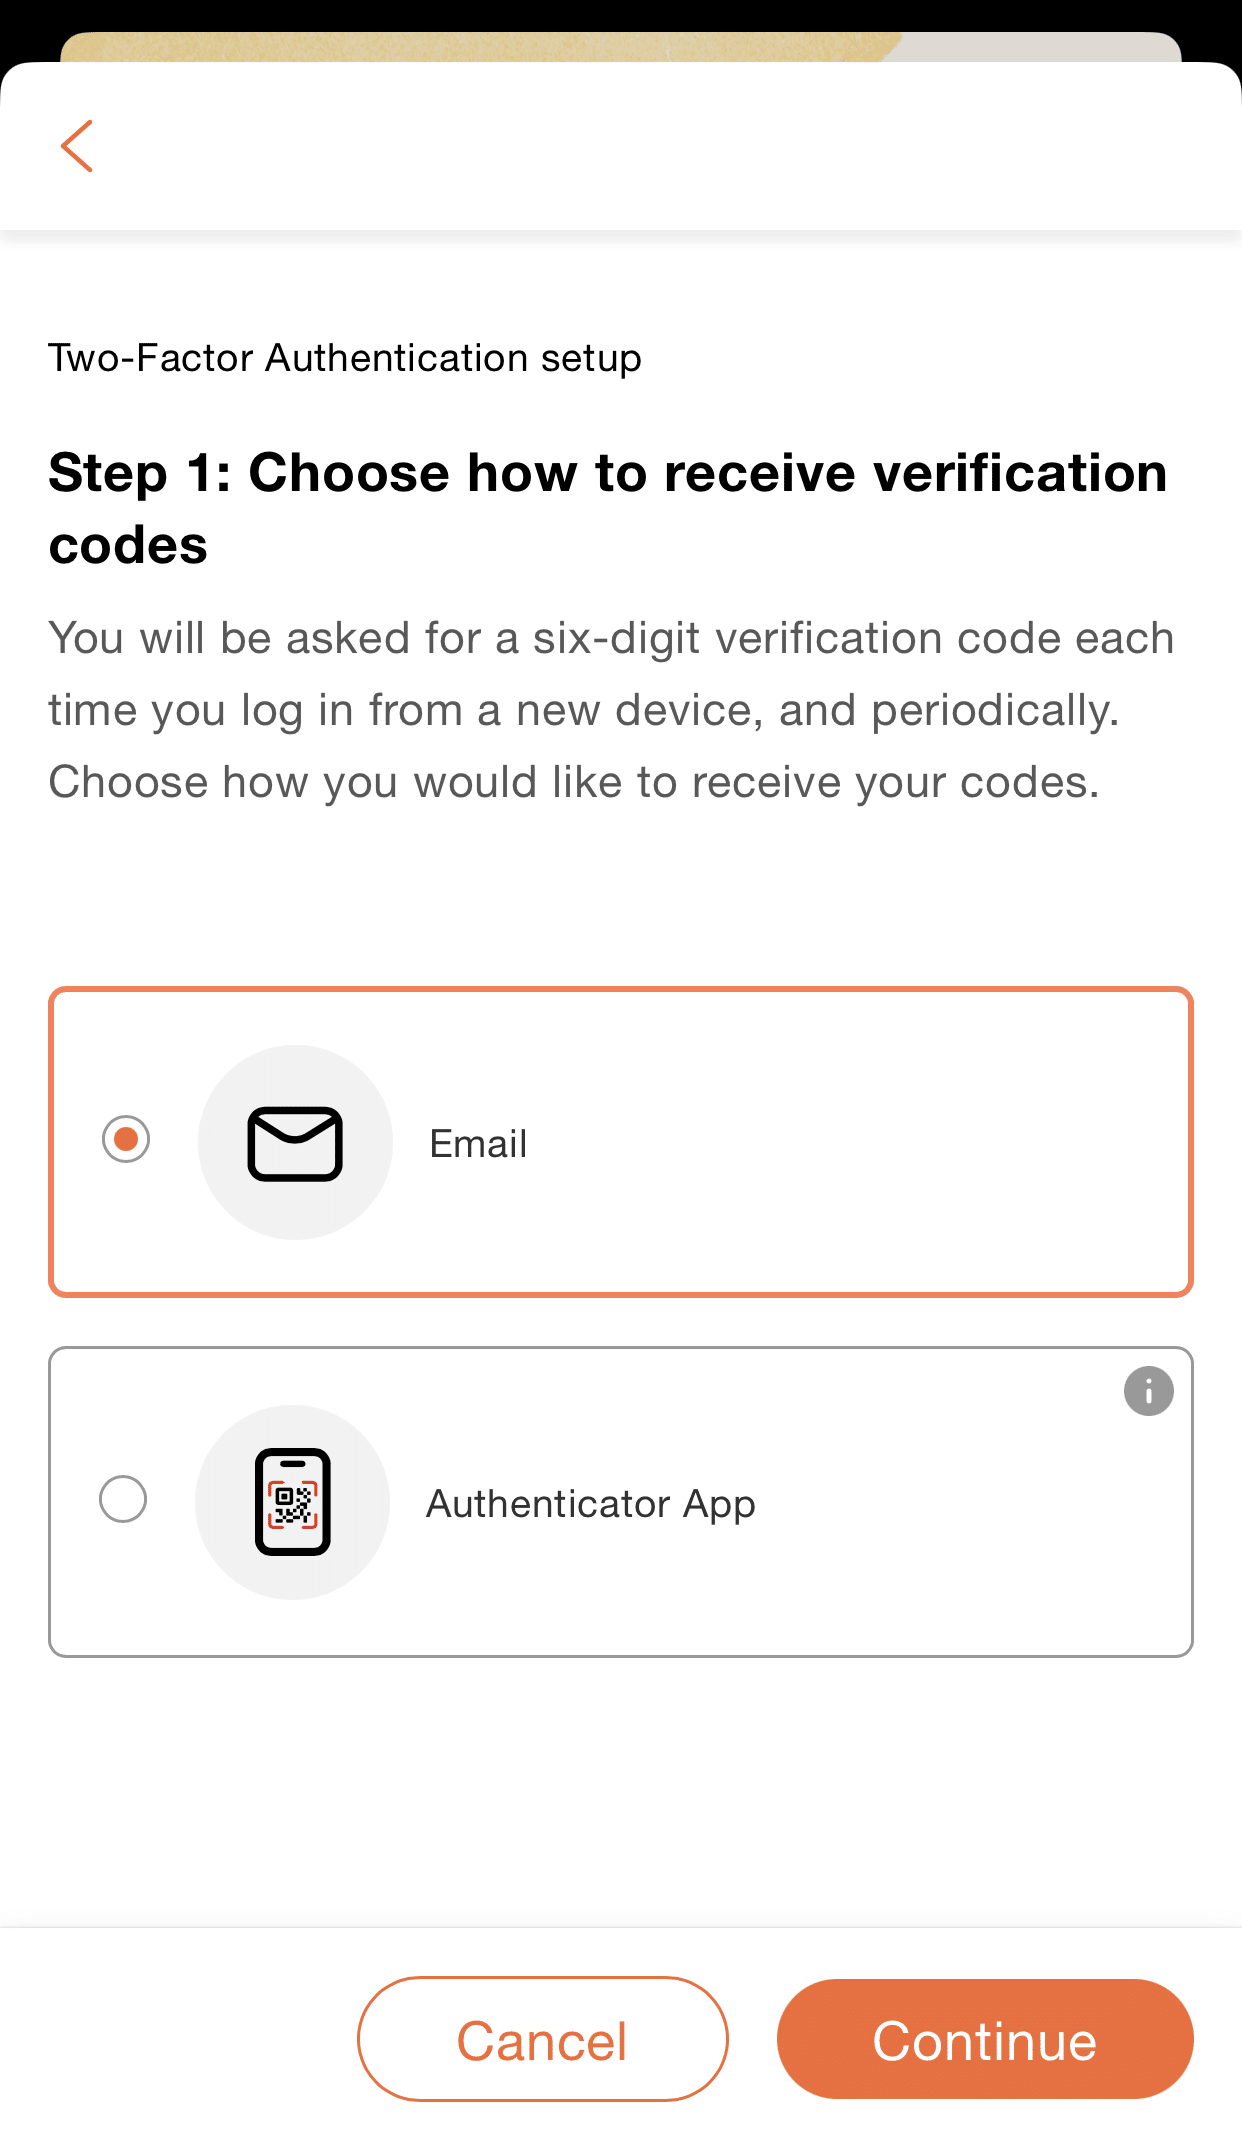 Choosing a verification method